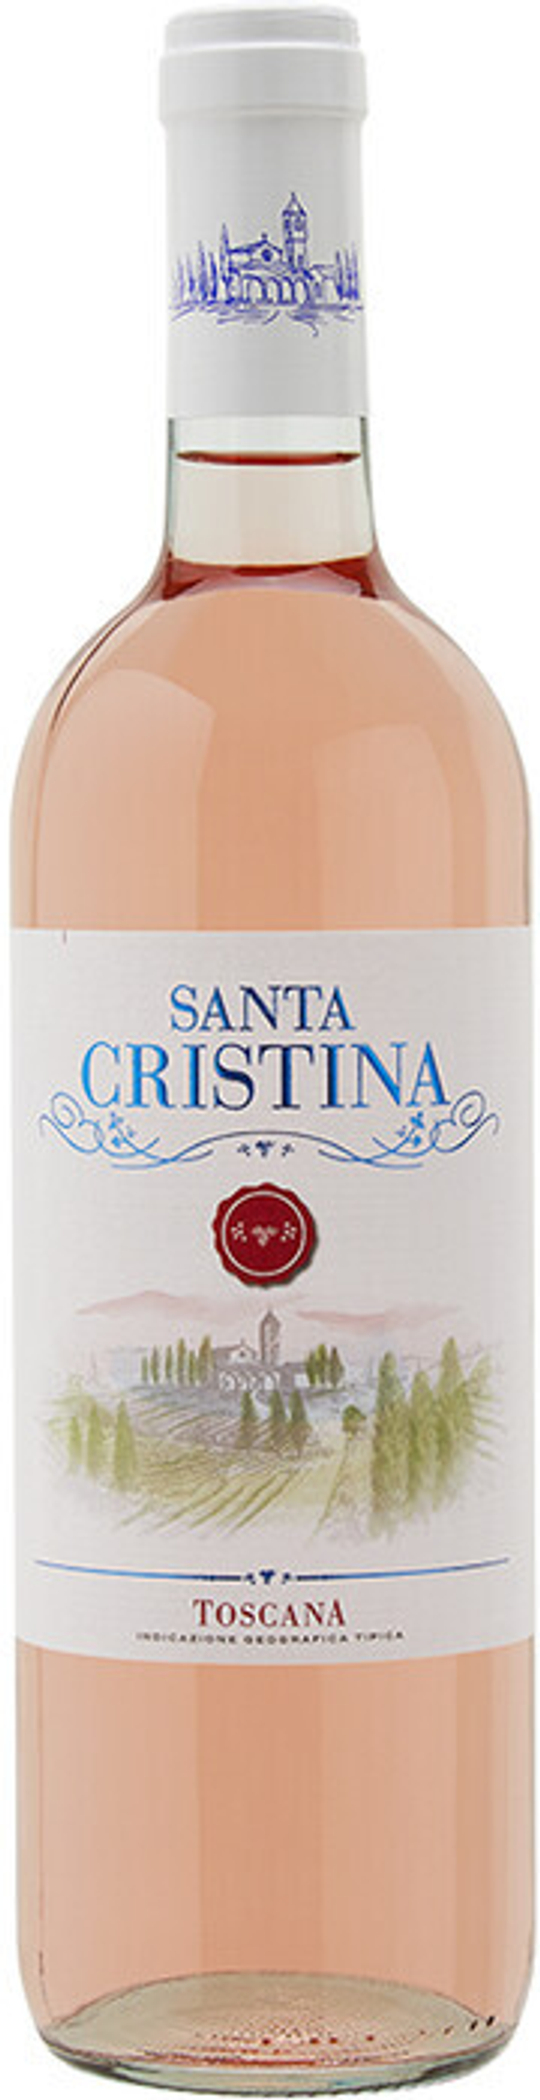 Вино Santa Cristina Rosato Toscana IGT, 0,75 л.